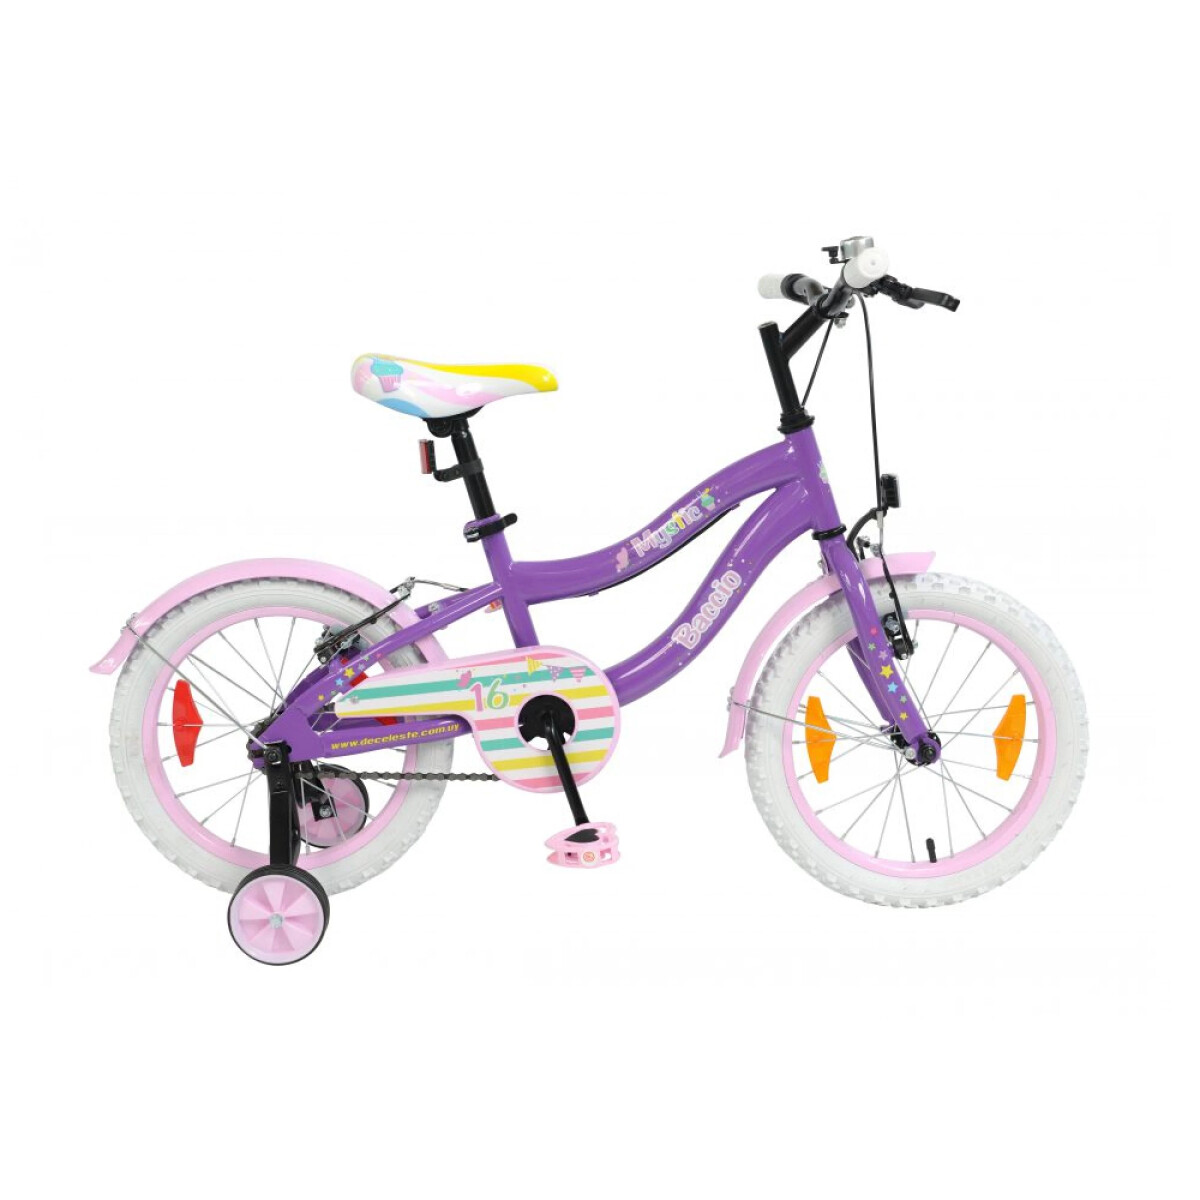 Bicicleta Baccio Mystic rodado 16 - Violeta 